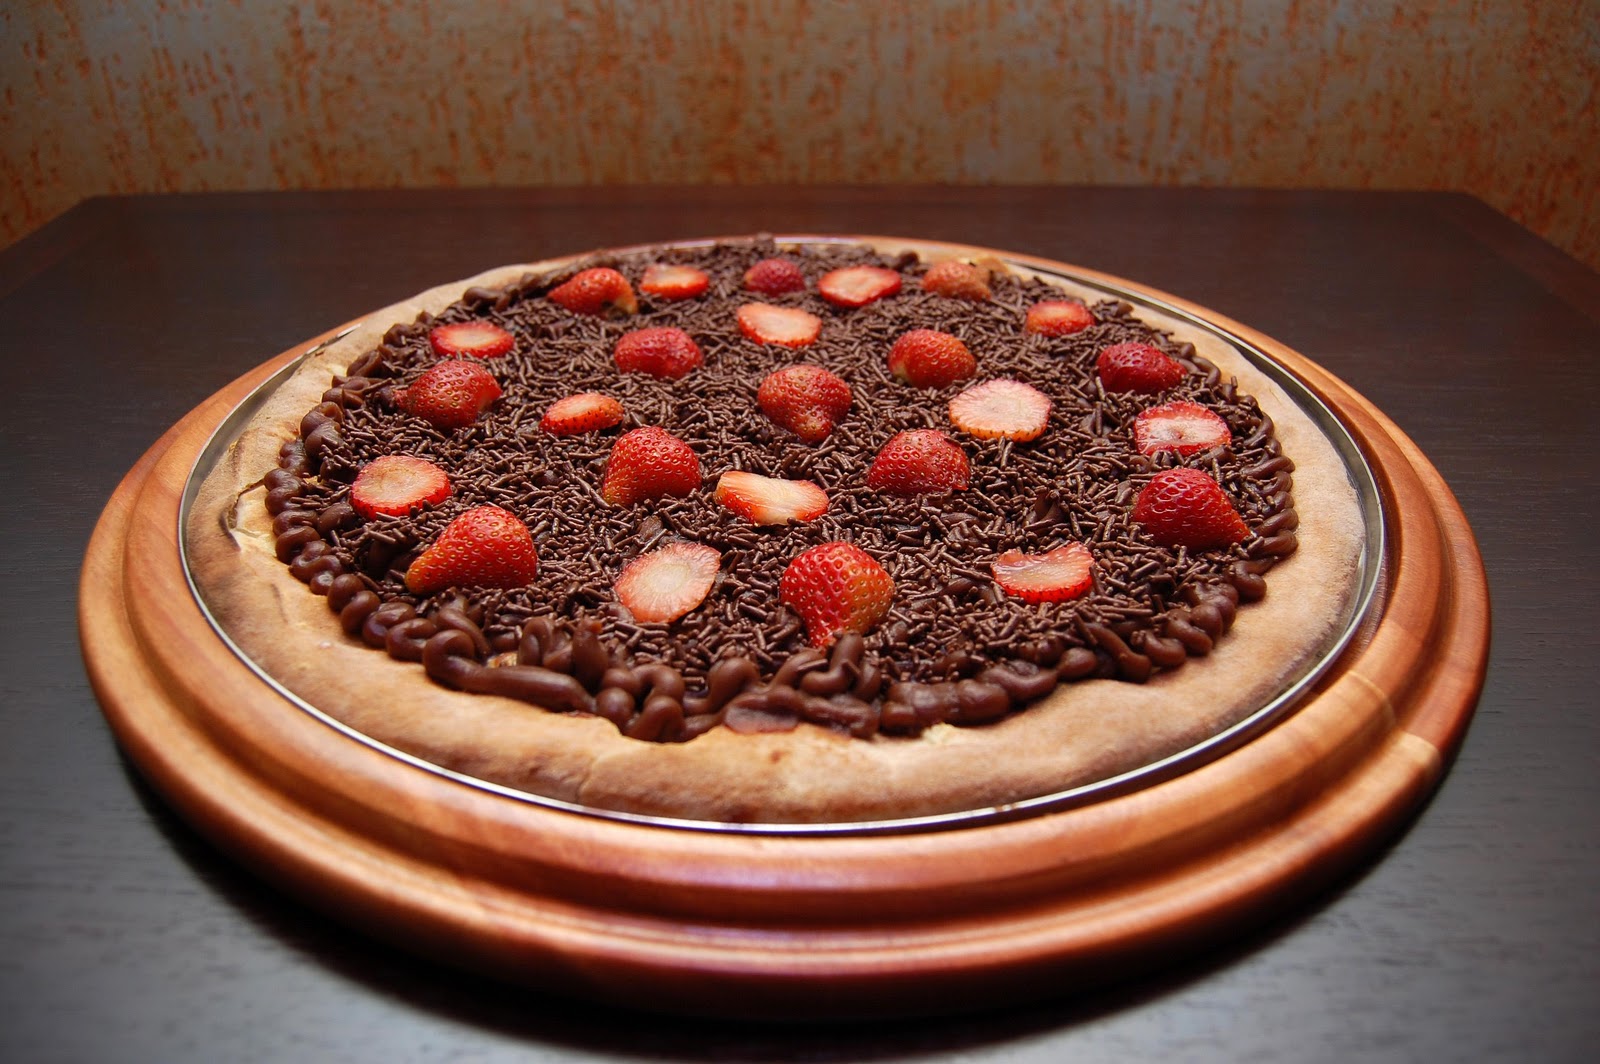 шоколадная пицца начинки фото 12